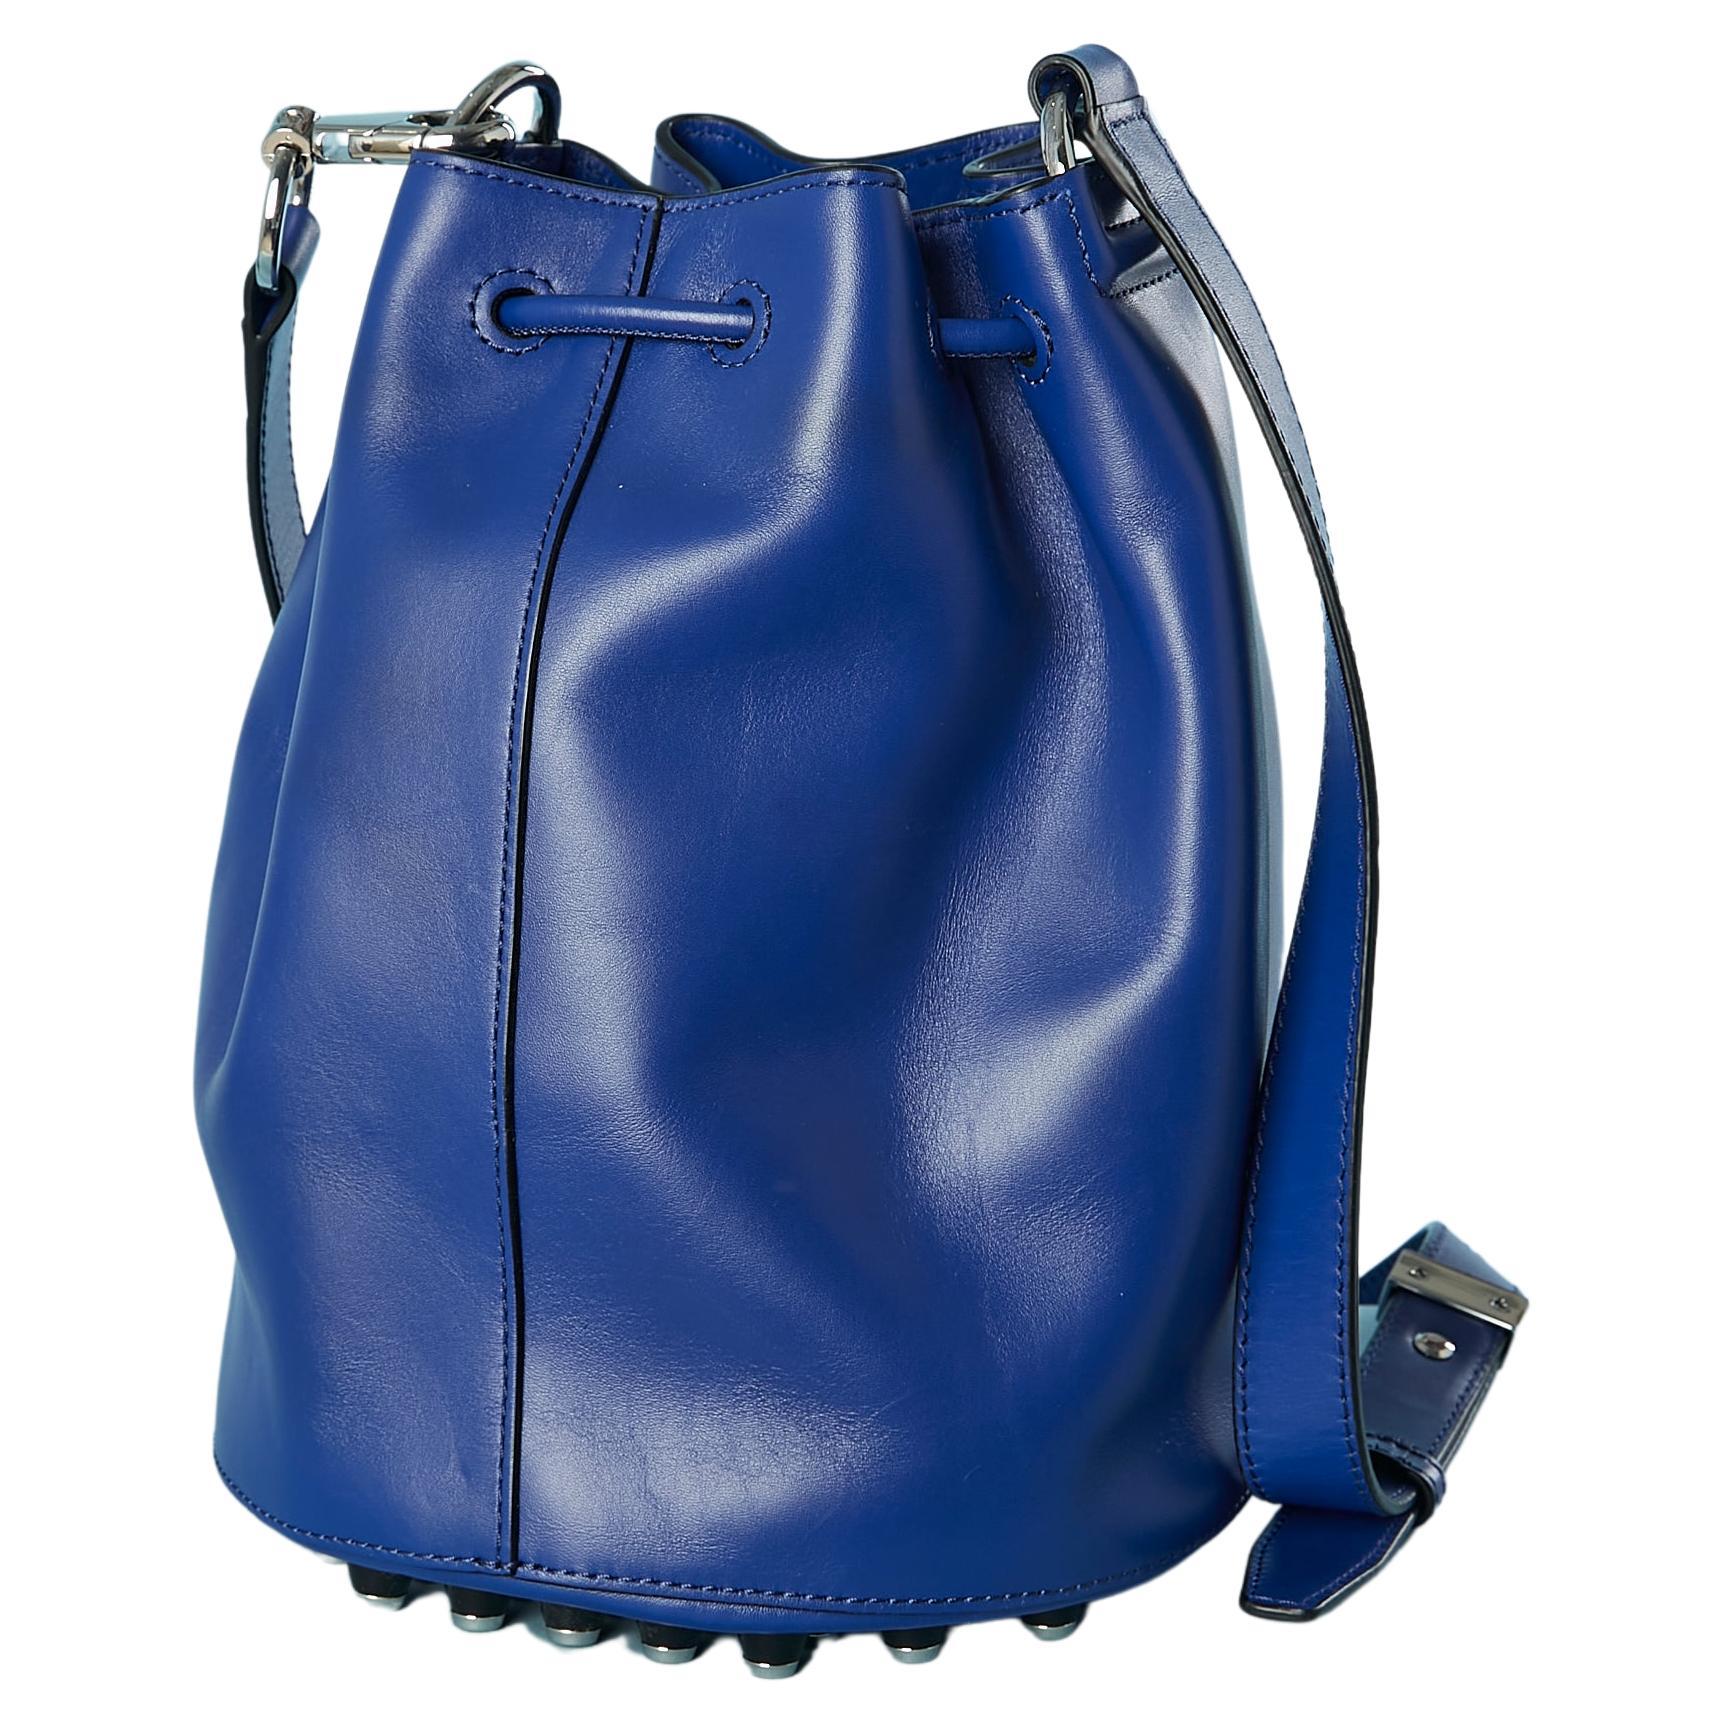 Accessorize London Women's Faux Leather Blue Callie Sling Bag